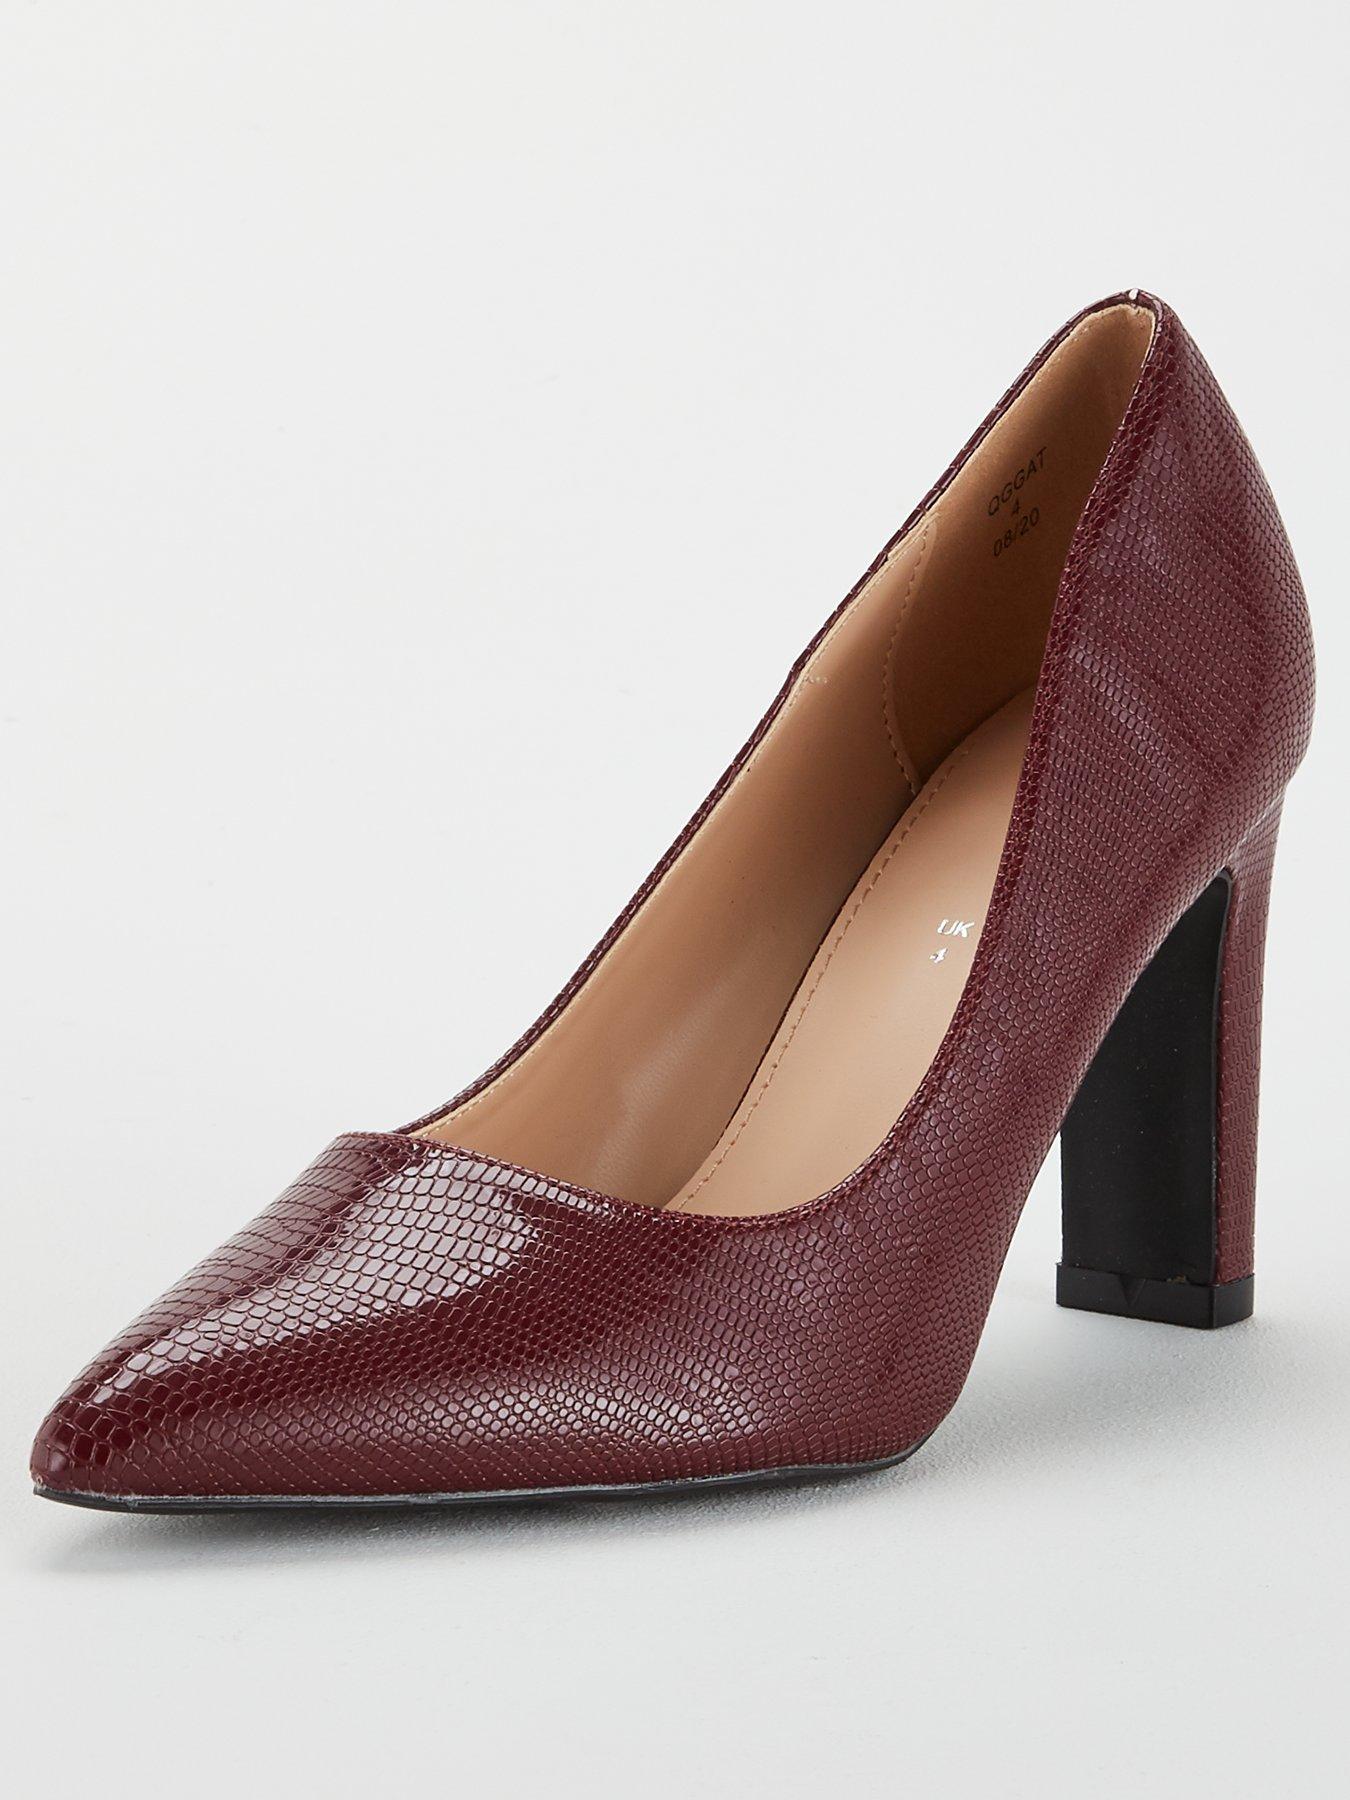 burgundy shoes womens uk